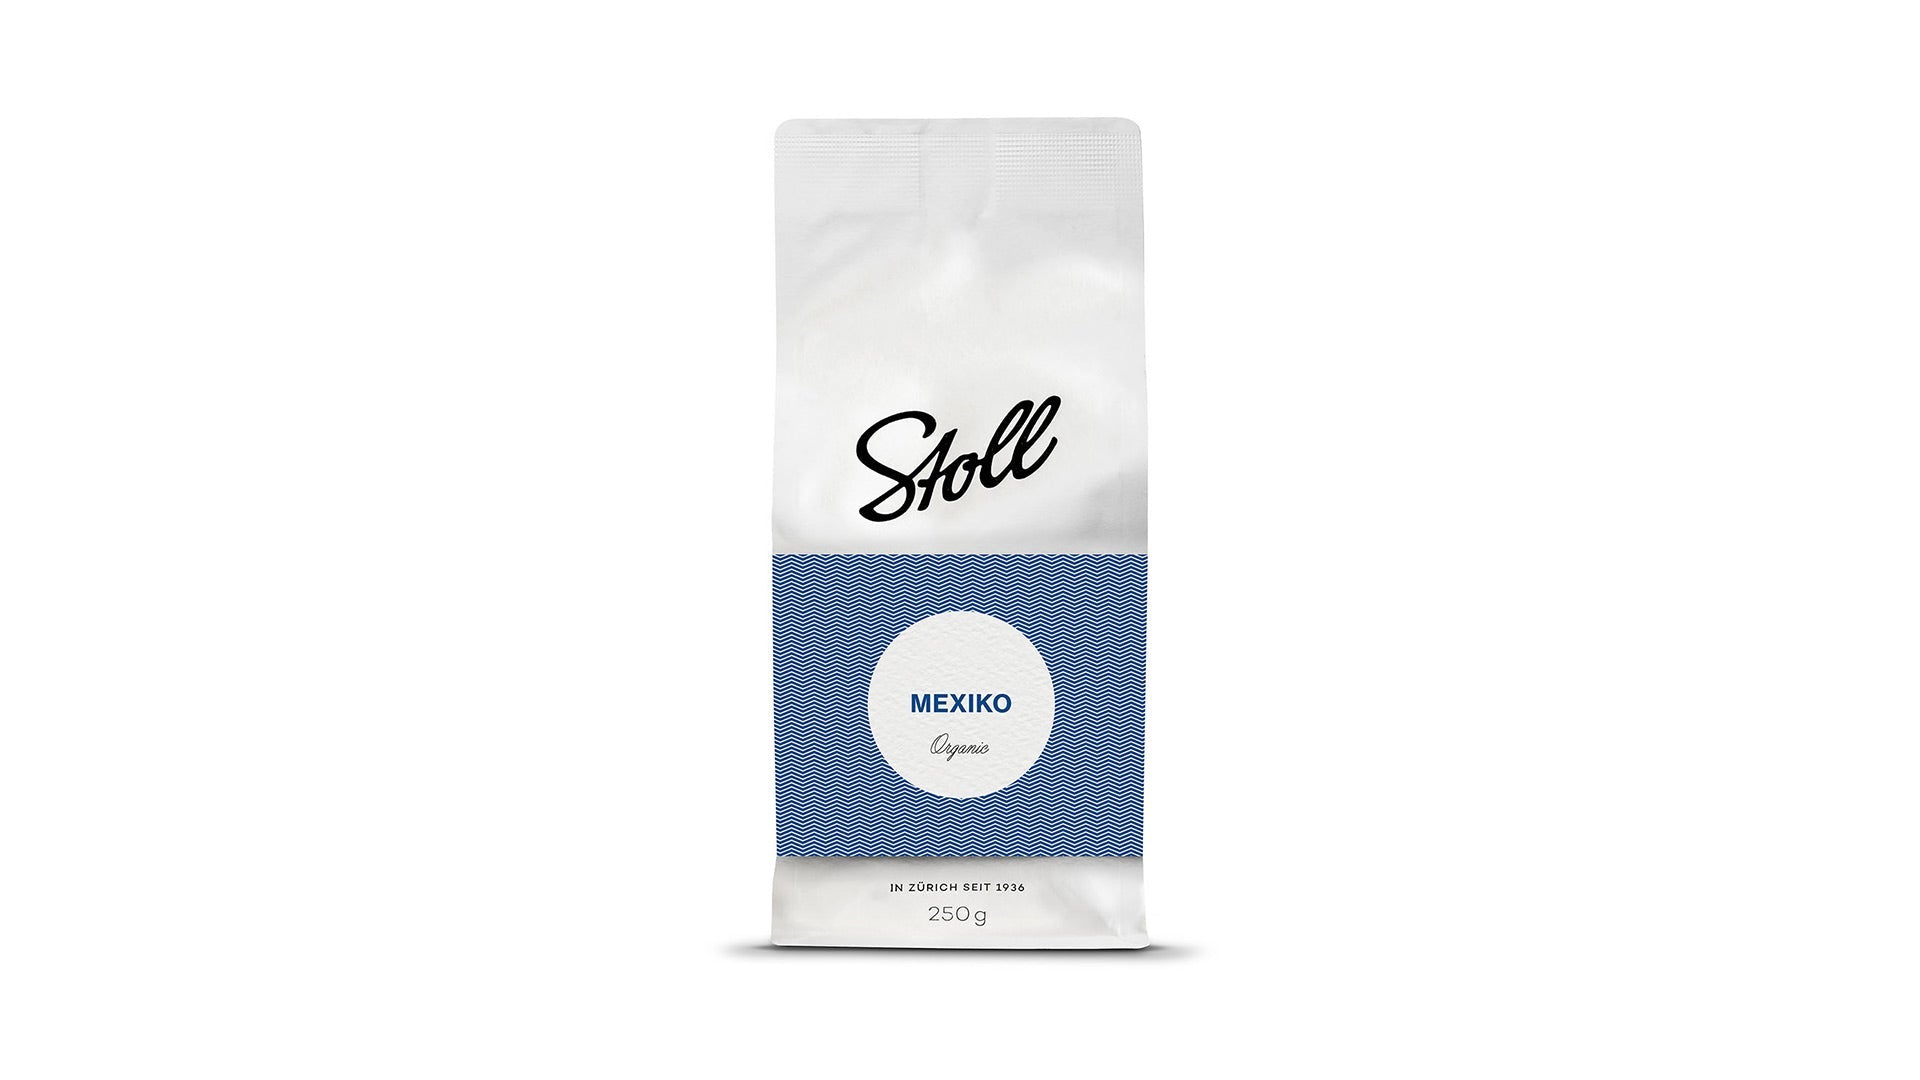 Hillsong - Stoll Organic 1.5 kg - kaffiabo